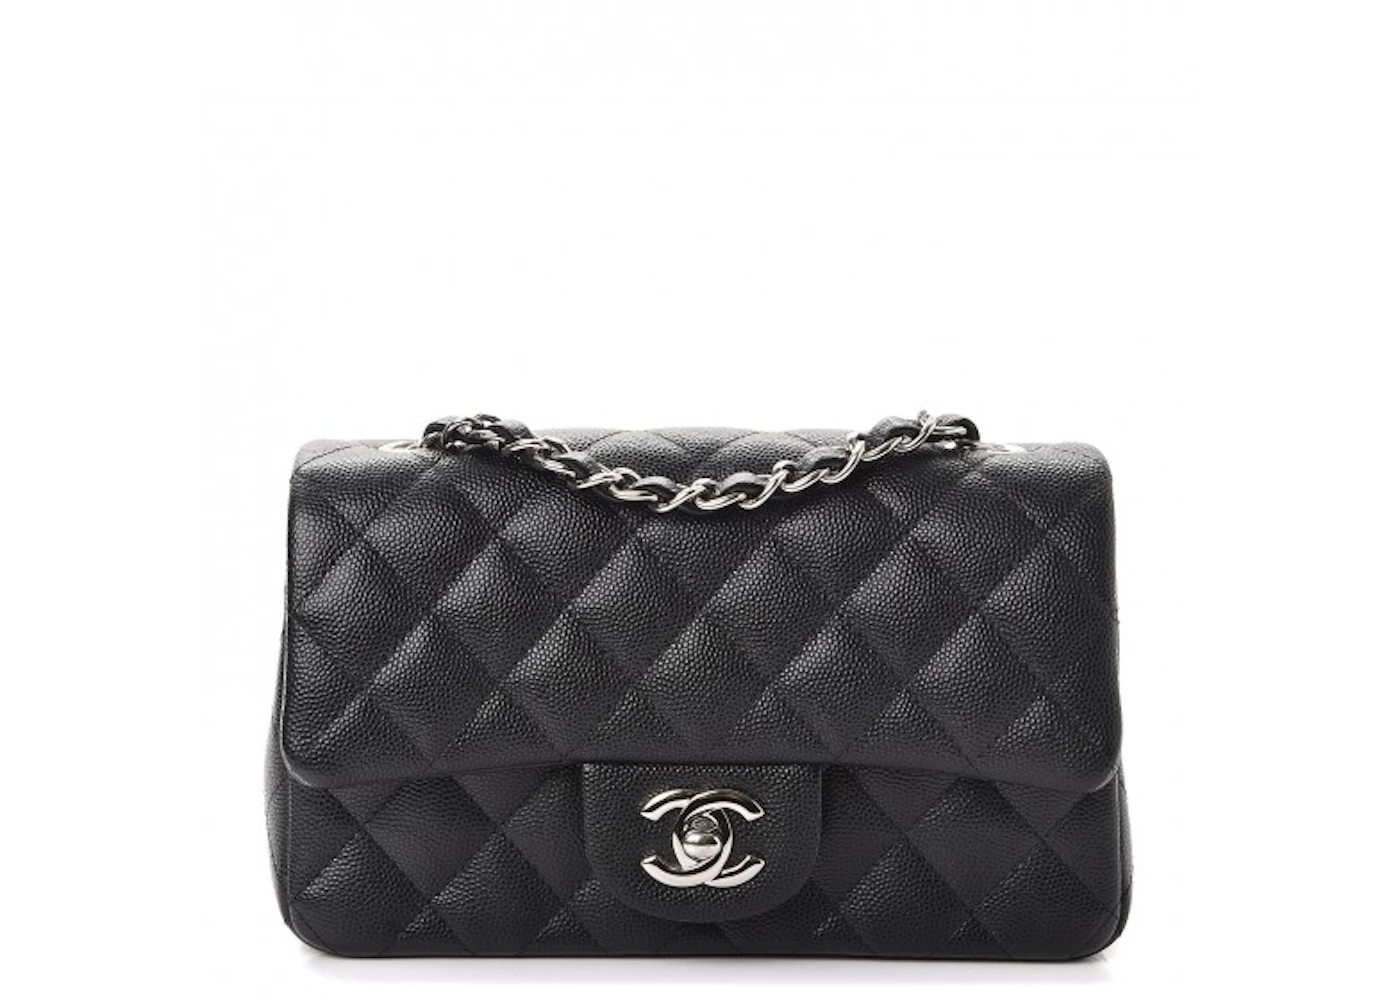 Chanel Mini Rectangular Flap Black Caviar in Caviar Leather with